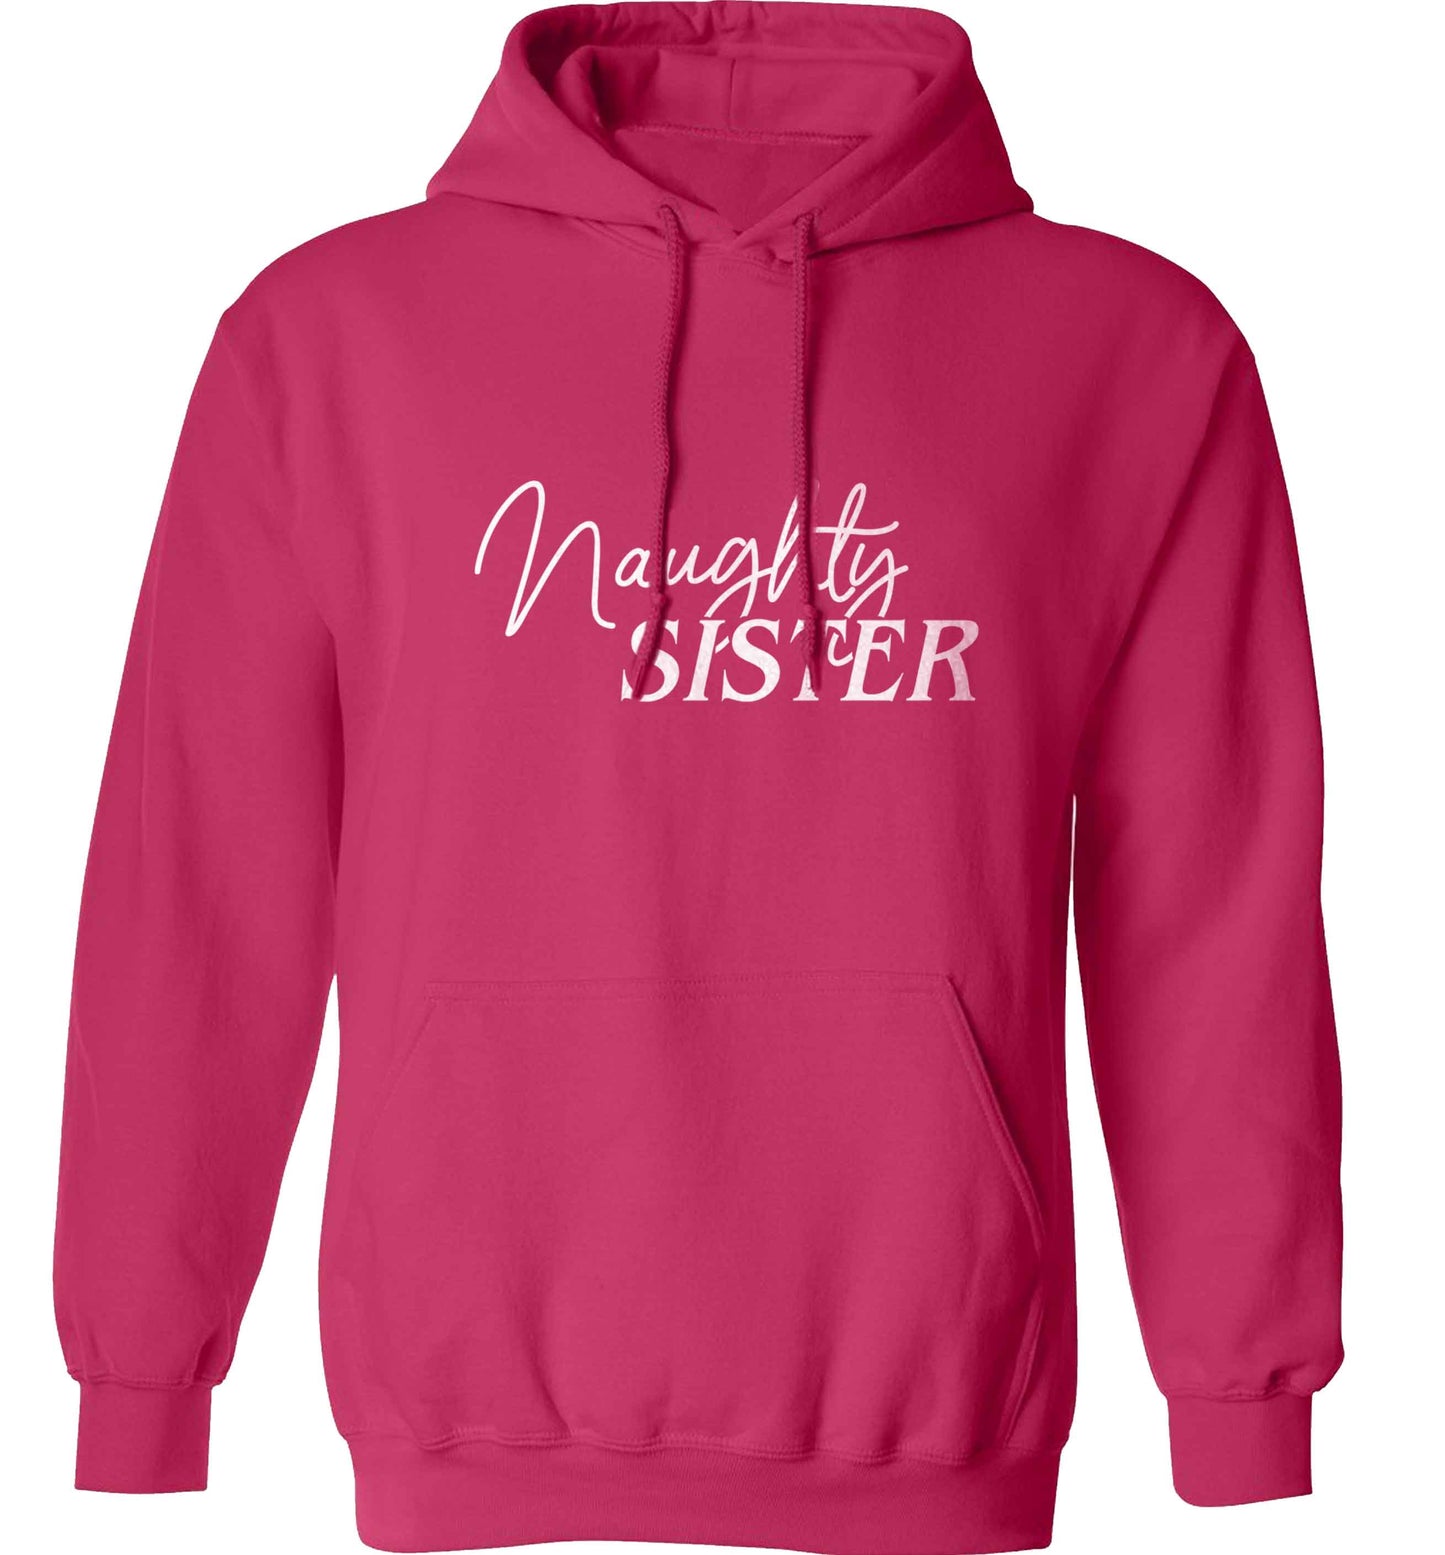 Naughty Sister adults unisex pink hoodie 2XL